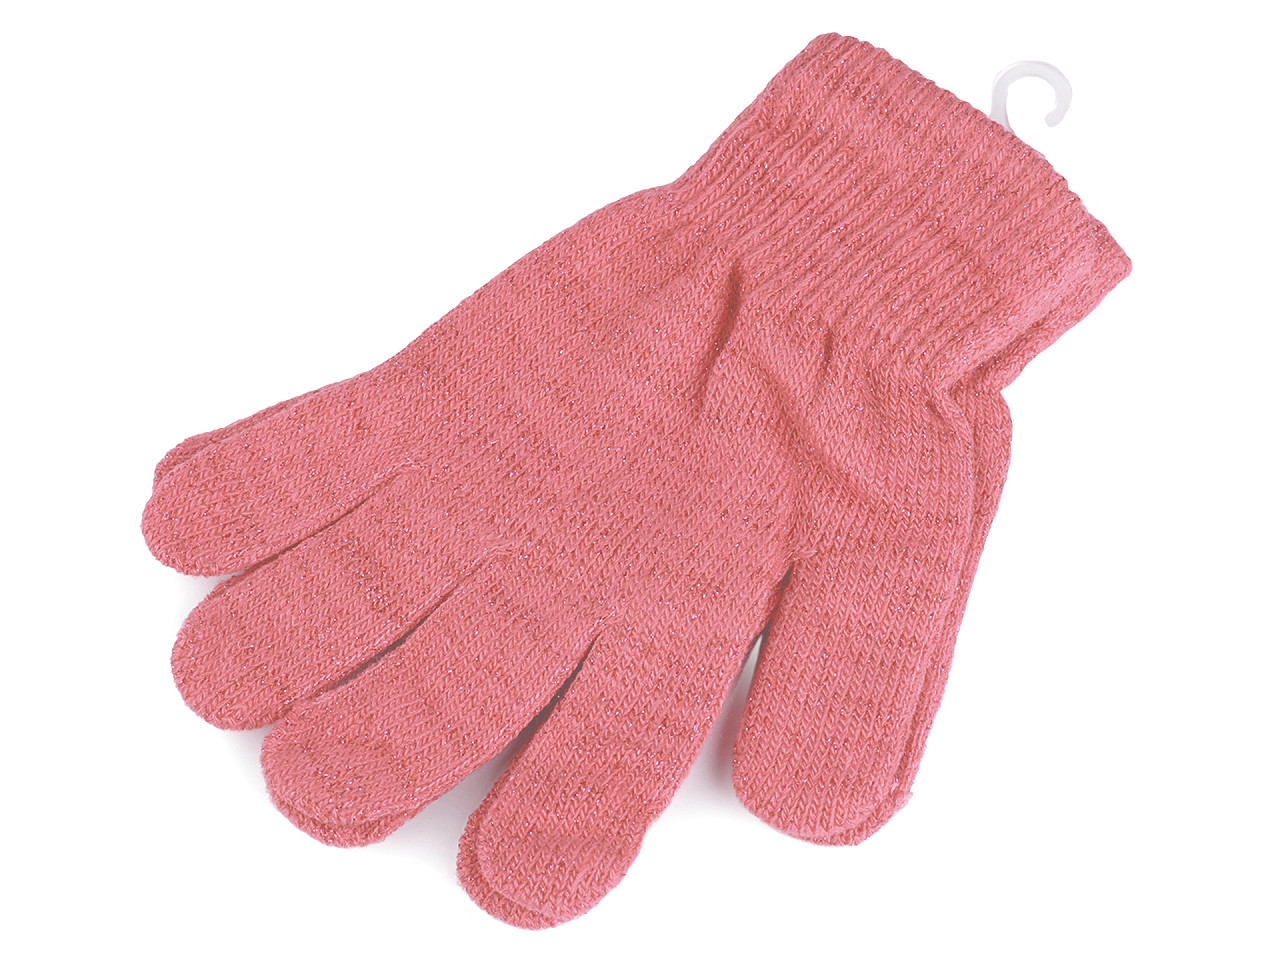 Mănuși tricotate pentru femei/fete cu lurex, roz, 1 pereche